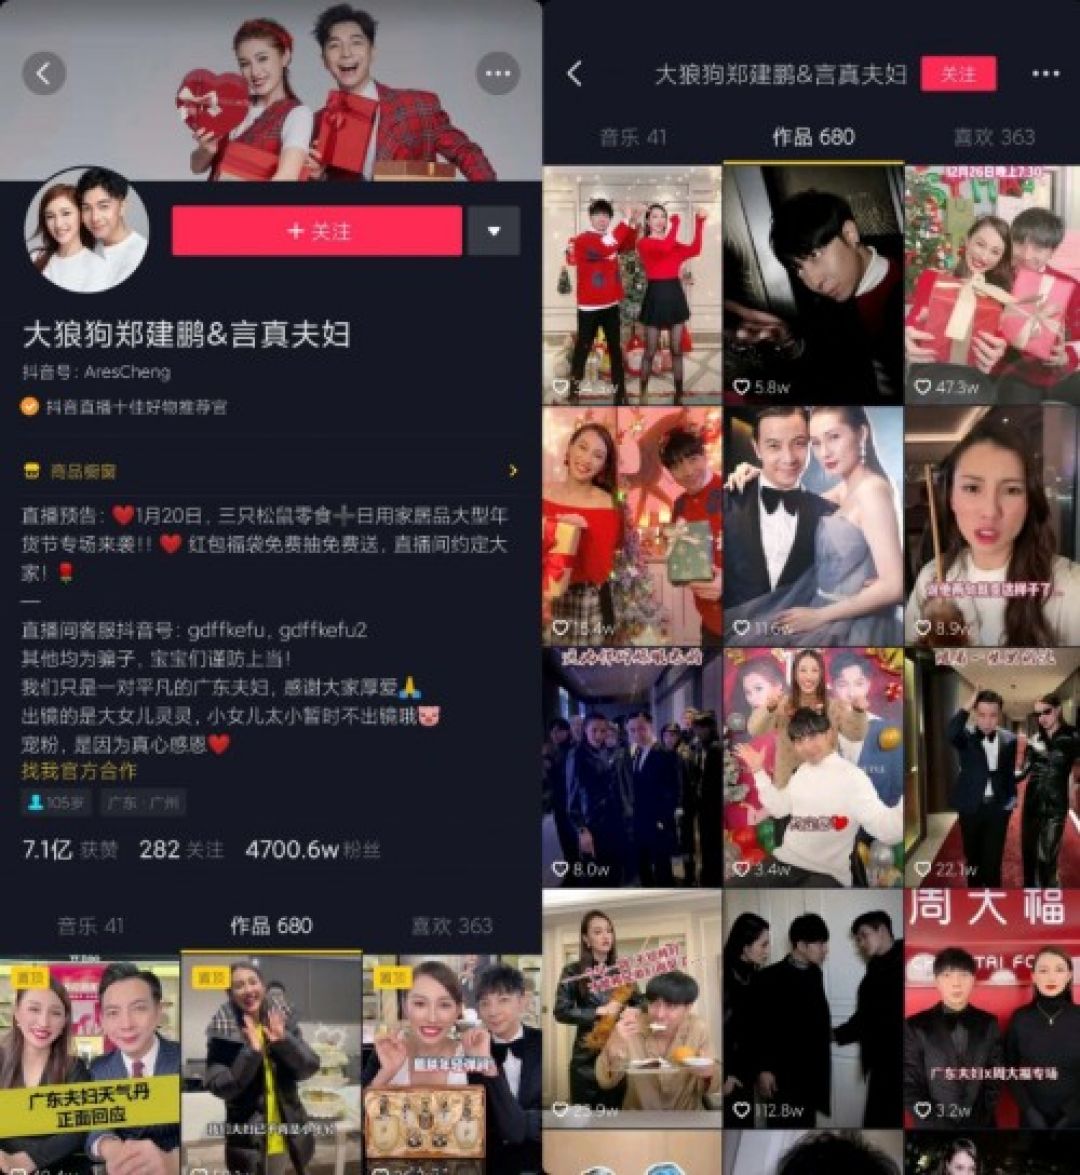 Guangdong Couple, Pasangan Paling Nge-Hits di TikTok China-Image-2